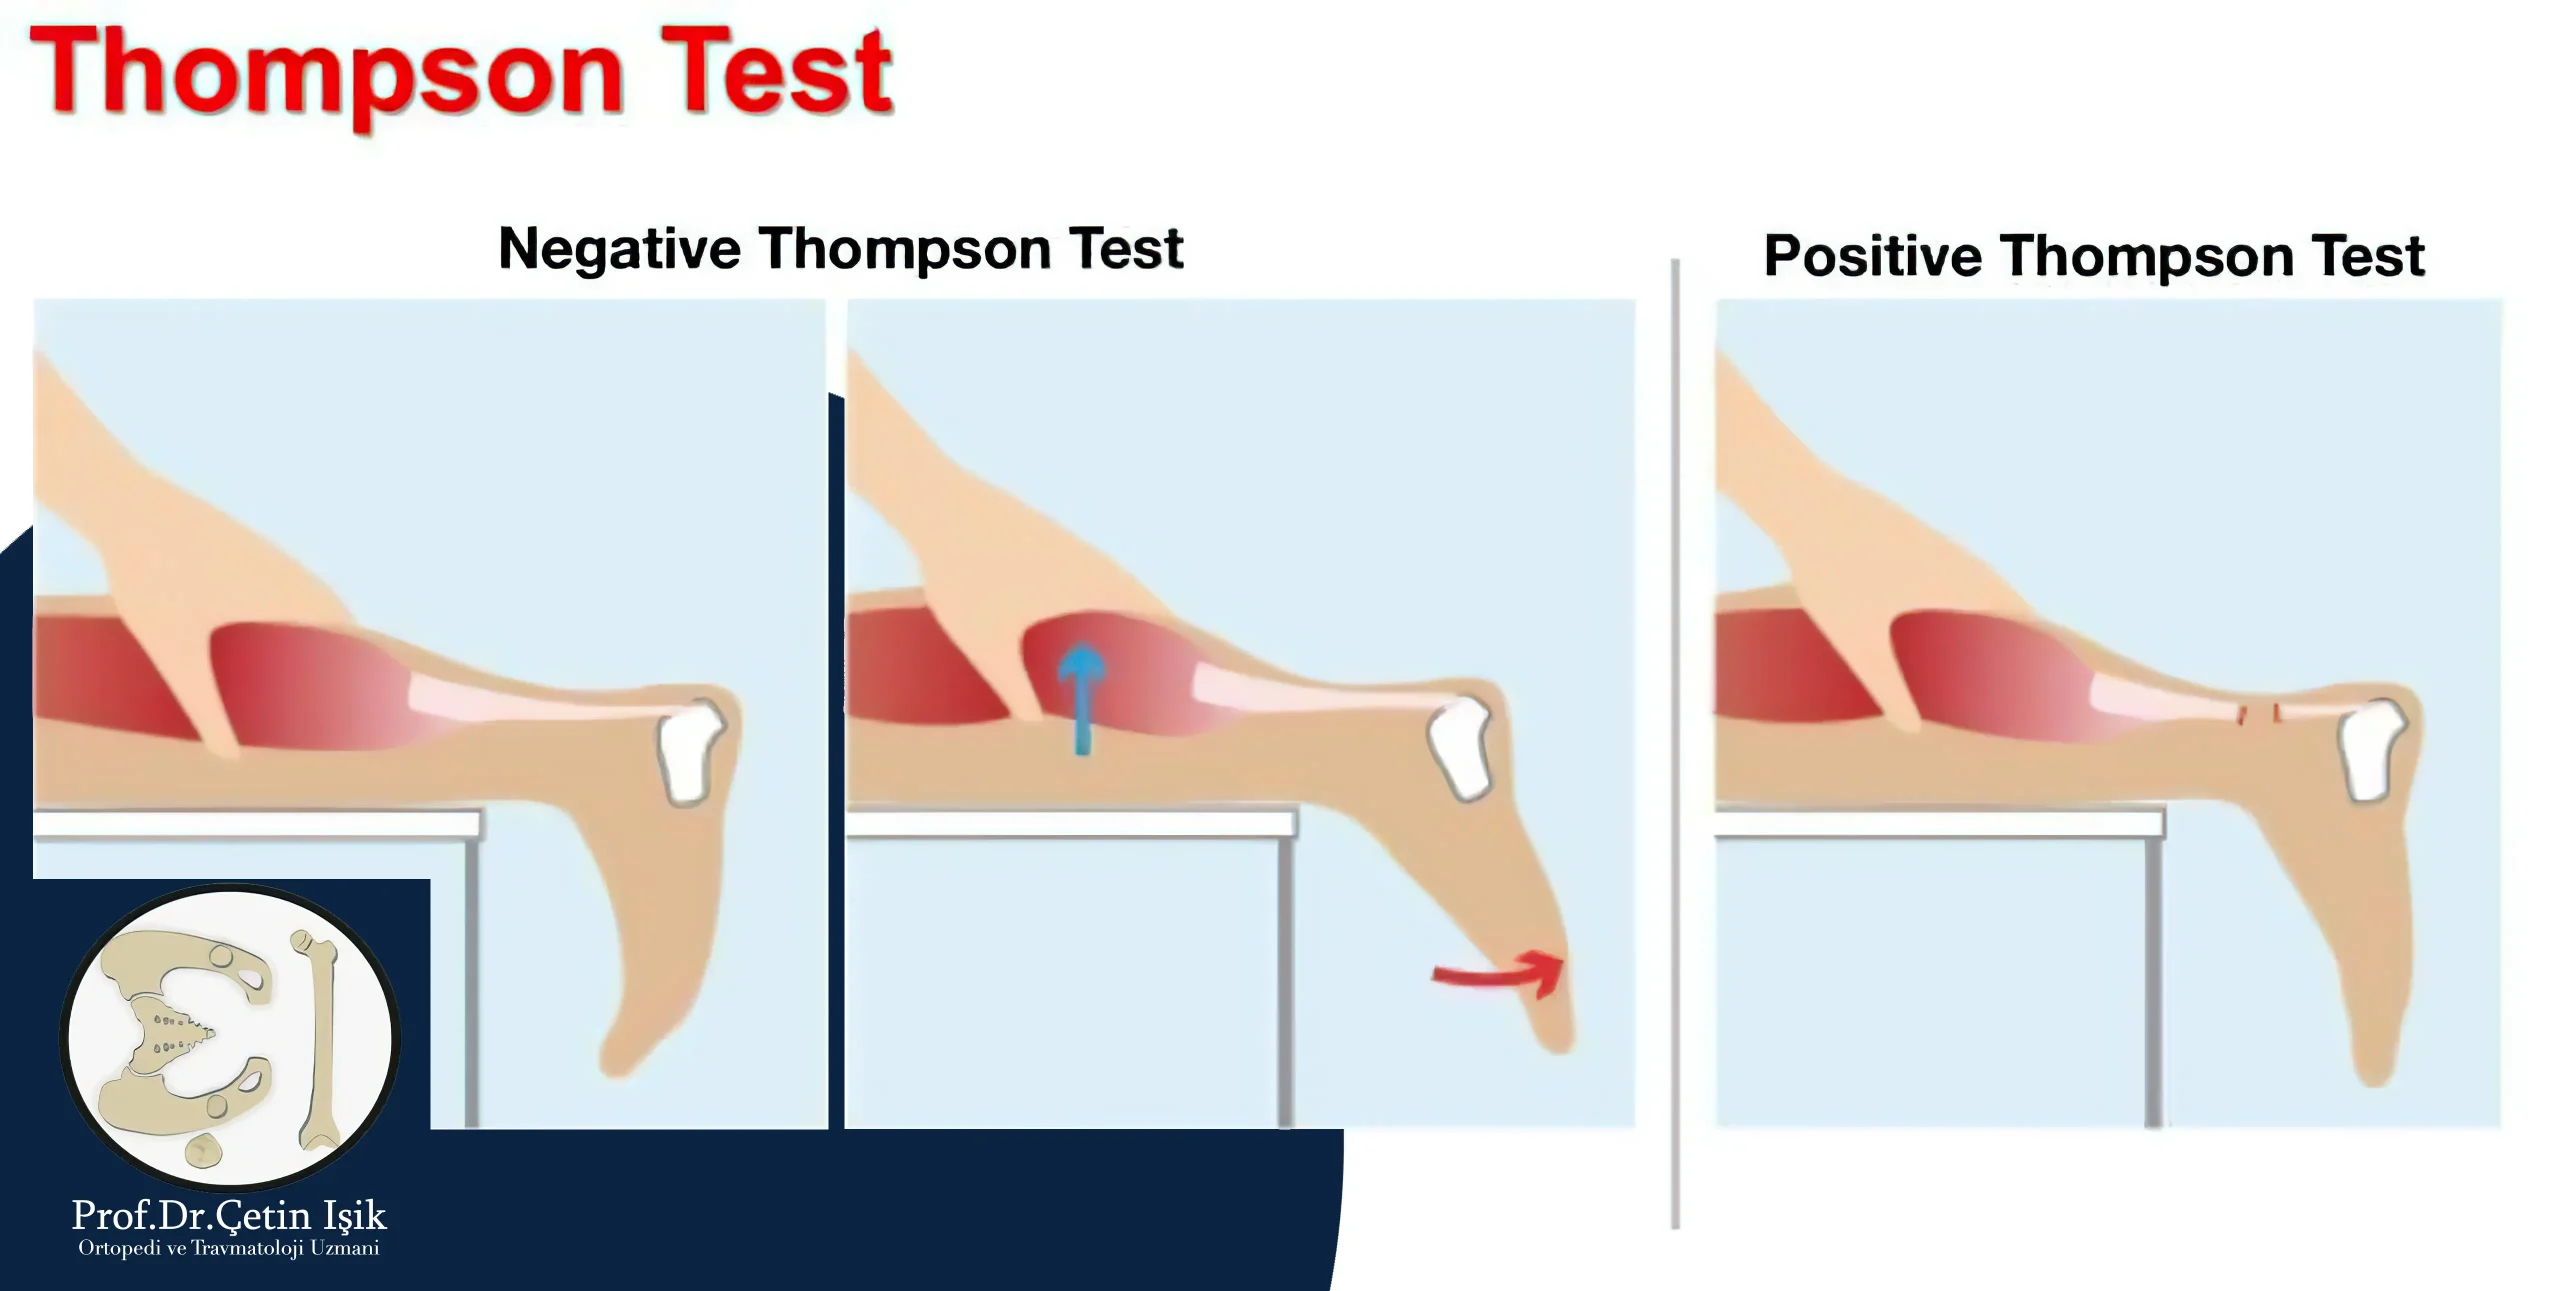 Image showing the Thomson test method for diagnosing Achilles tendinitis